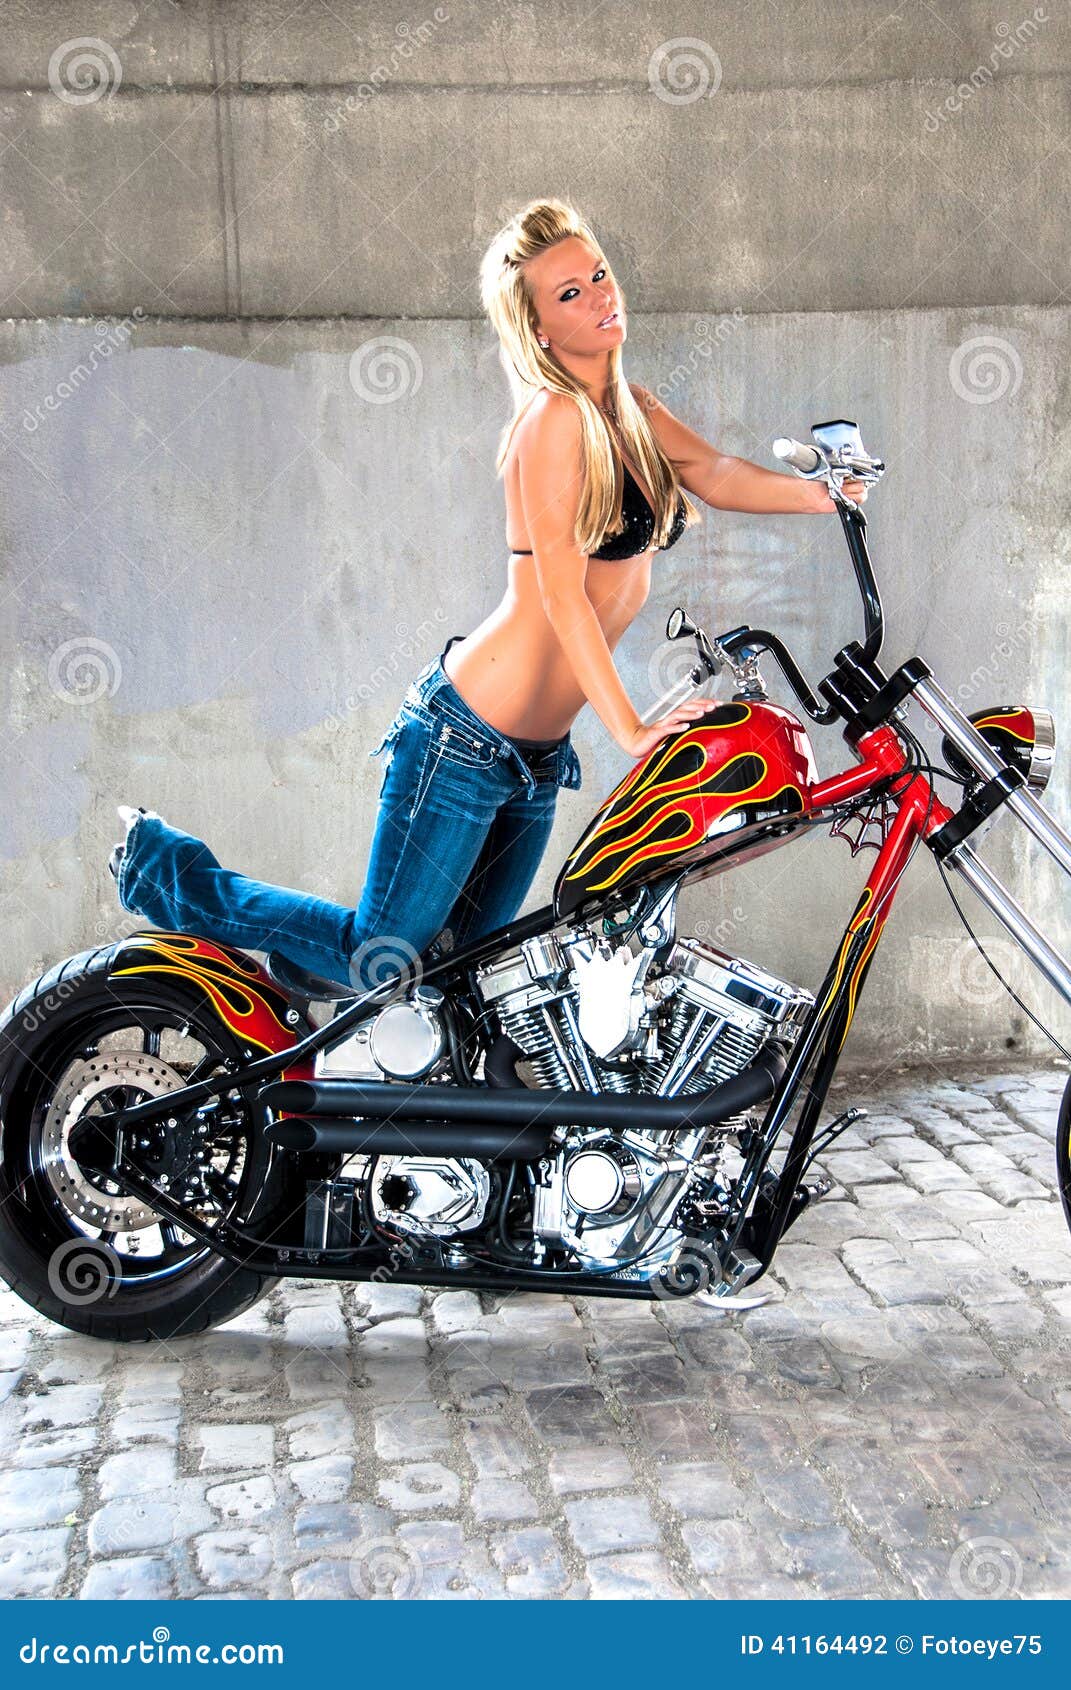 Chopper motorcycle models girls